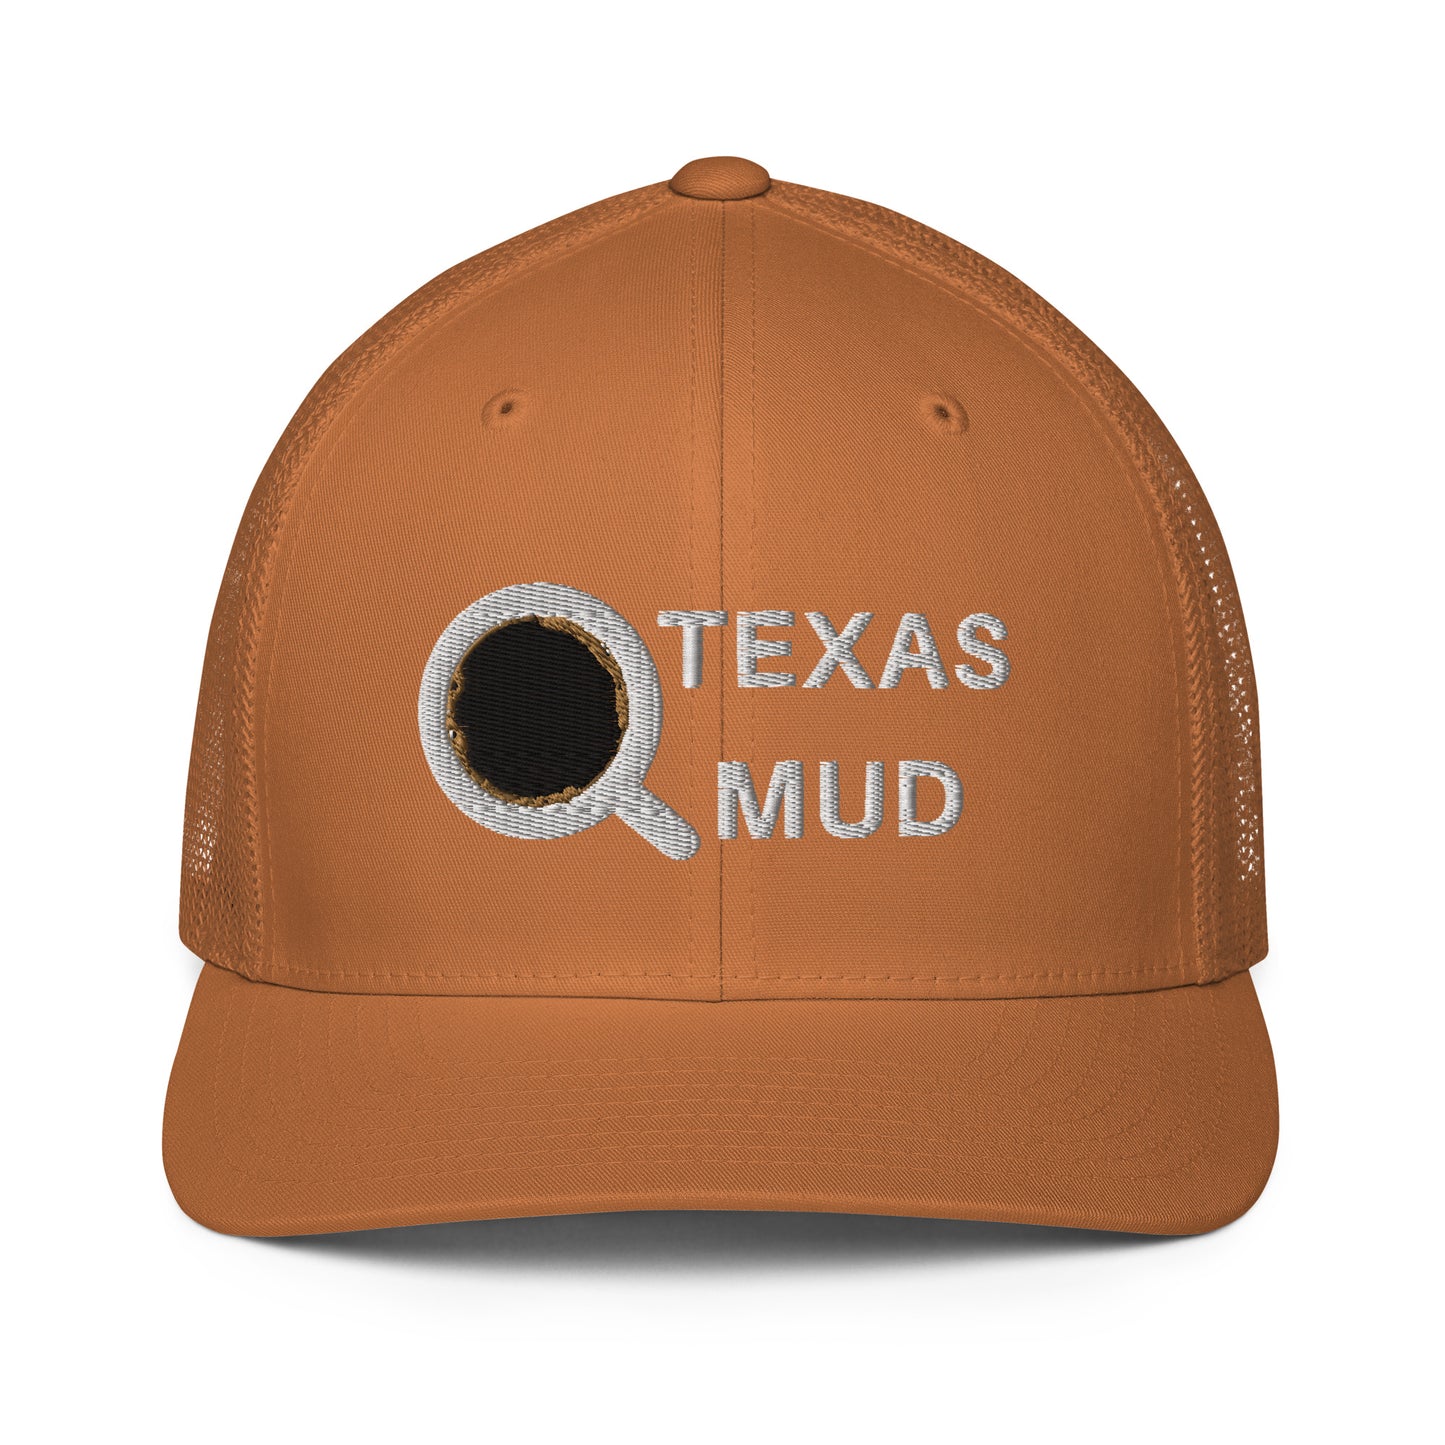 TEXAS MUD COFFEE - Closed-back trucker cap